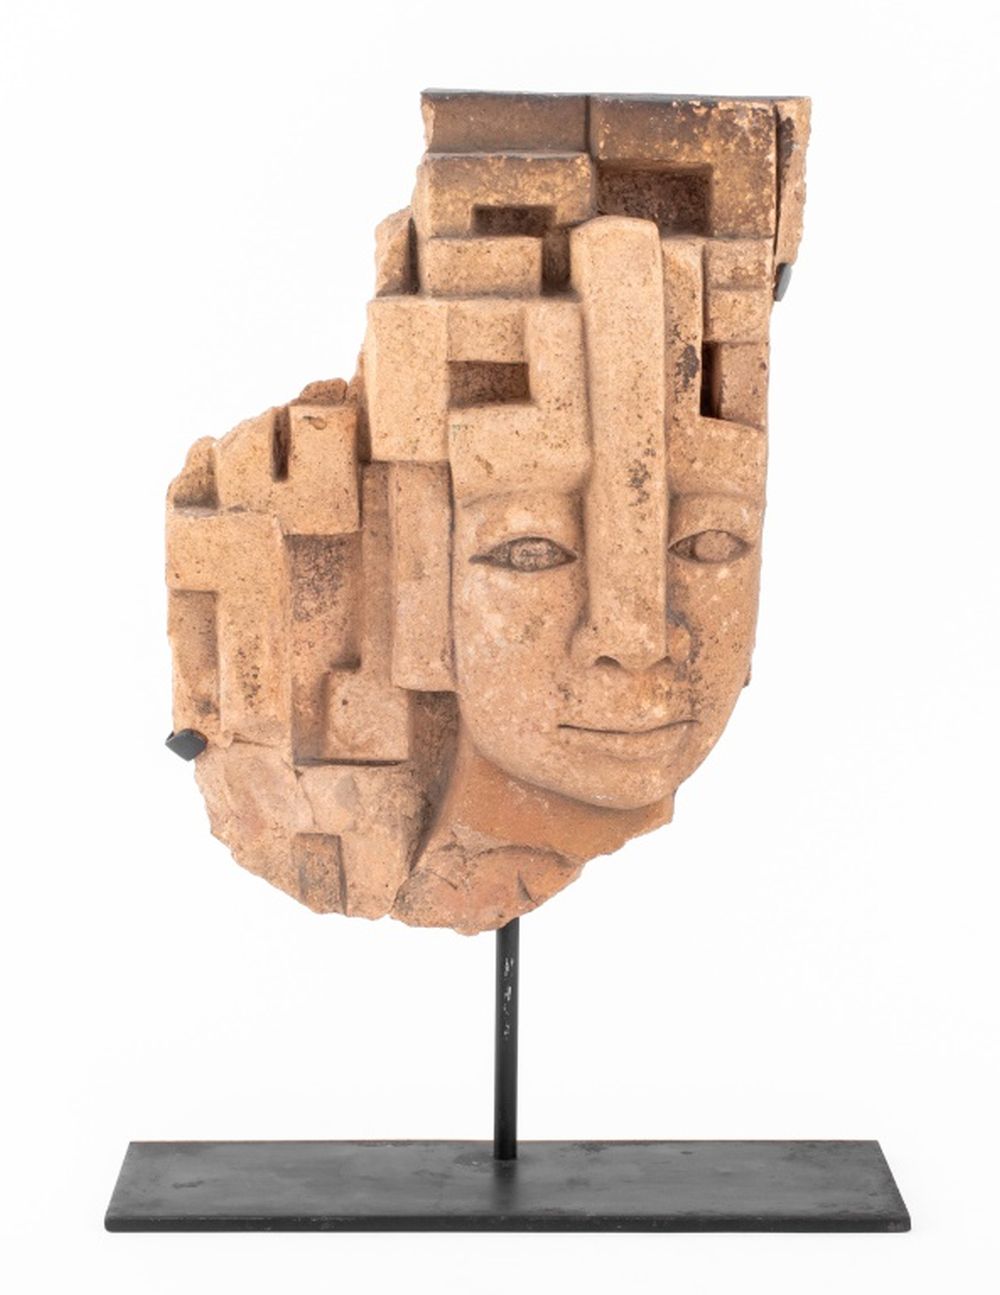 MAYAN-AZTEC REVIVAL ART DECO ARCHITECTURAL